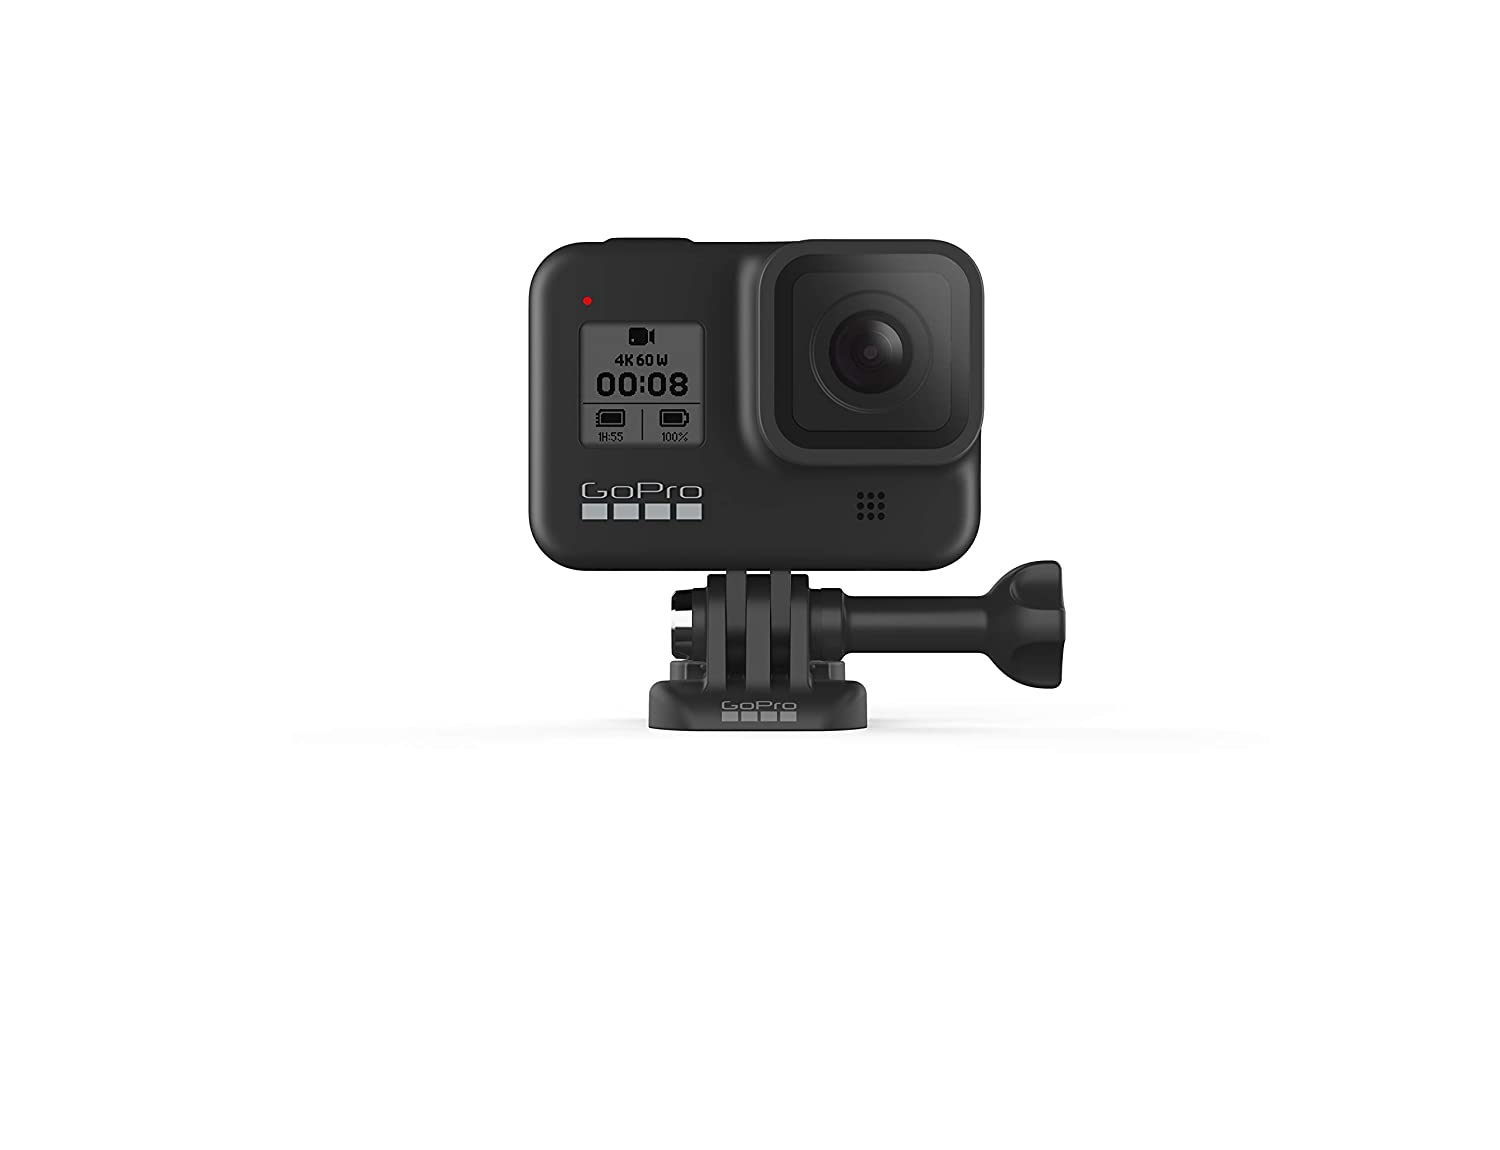 GoPro Hero8 Action Camera